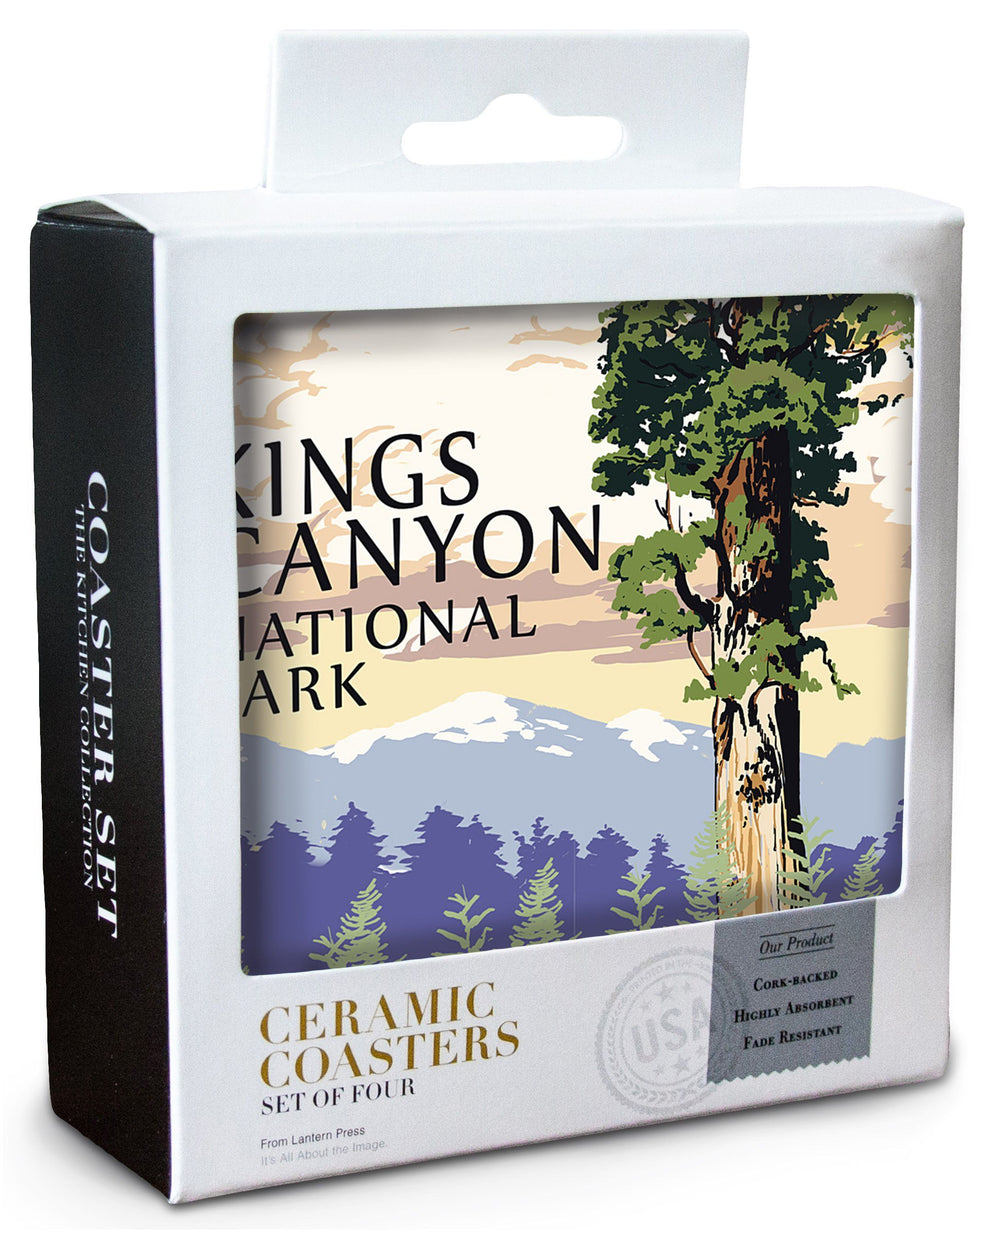 Kings Canyon National Park, California, General Grant Tree and Mountains, Lantern Press Artwork, Coaster Set Coasters Lantern Press 